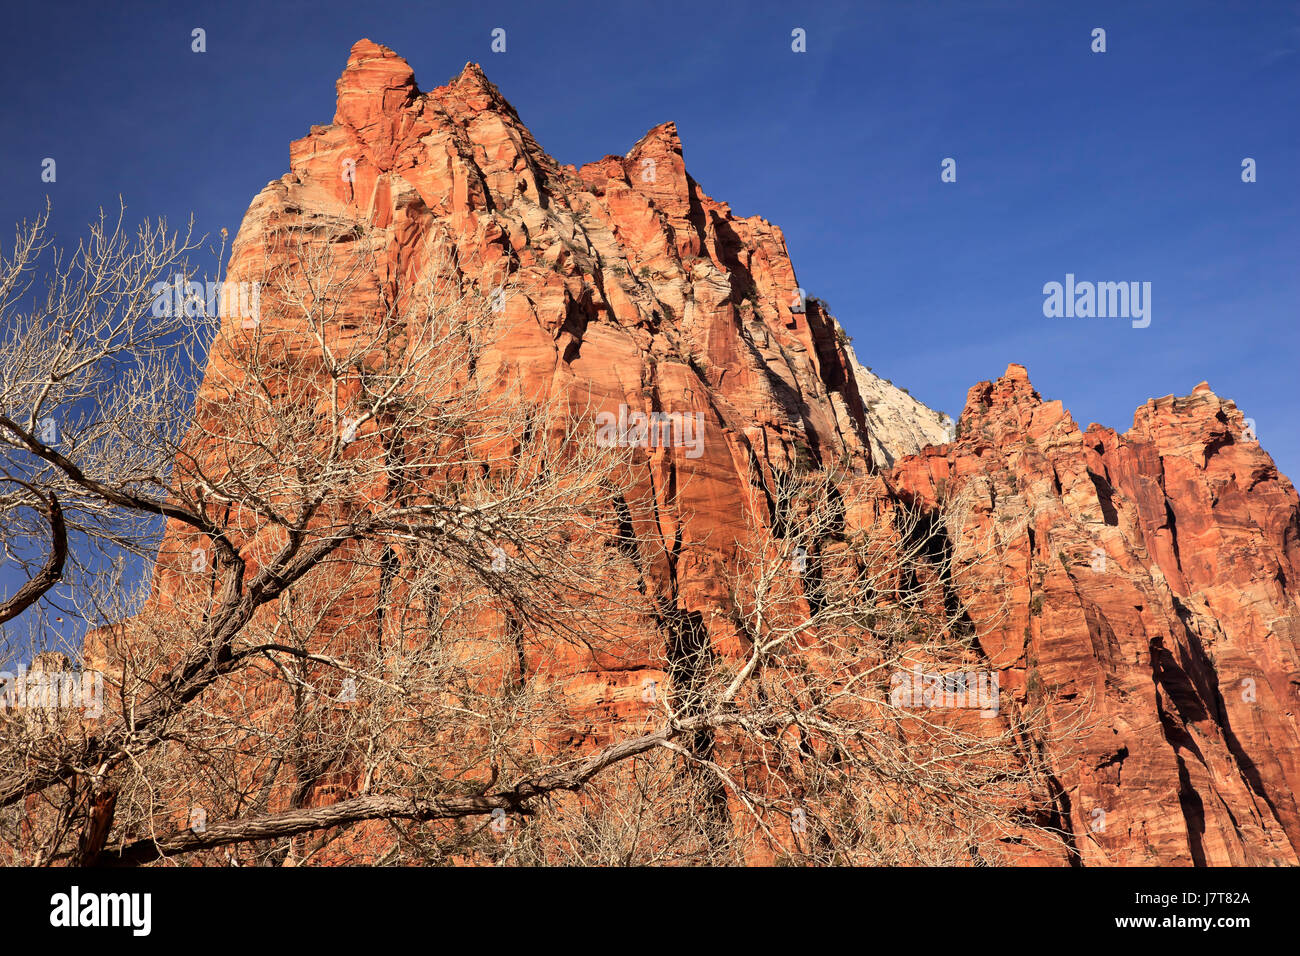 Canyon landscape scenery countryside nature blue beautiful beauteously nice Stock Photo